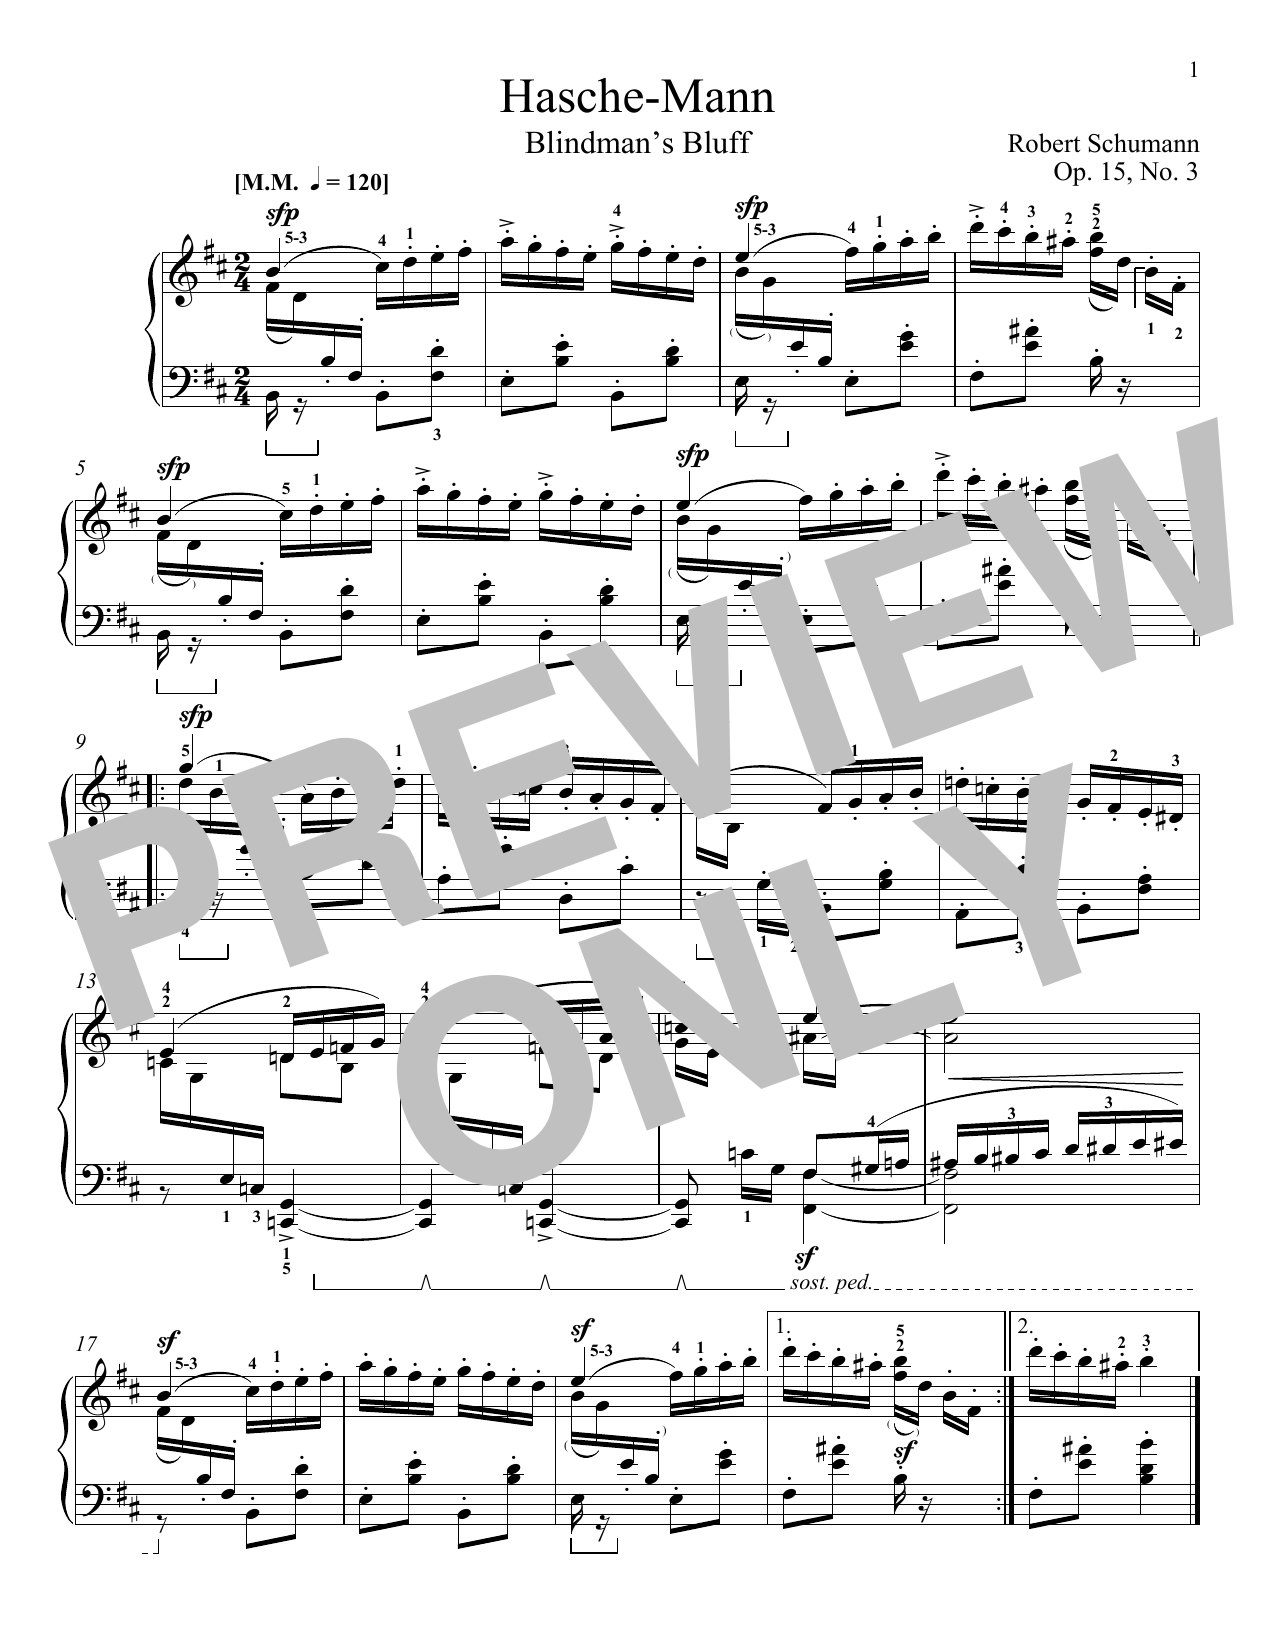 Robert Schumann Blindman's Bluff, Op. 15, No. 3 sheet music notes and chords arranged for Piano Solo